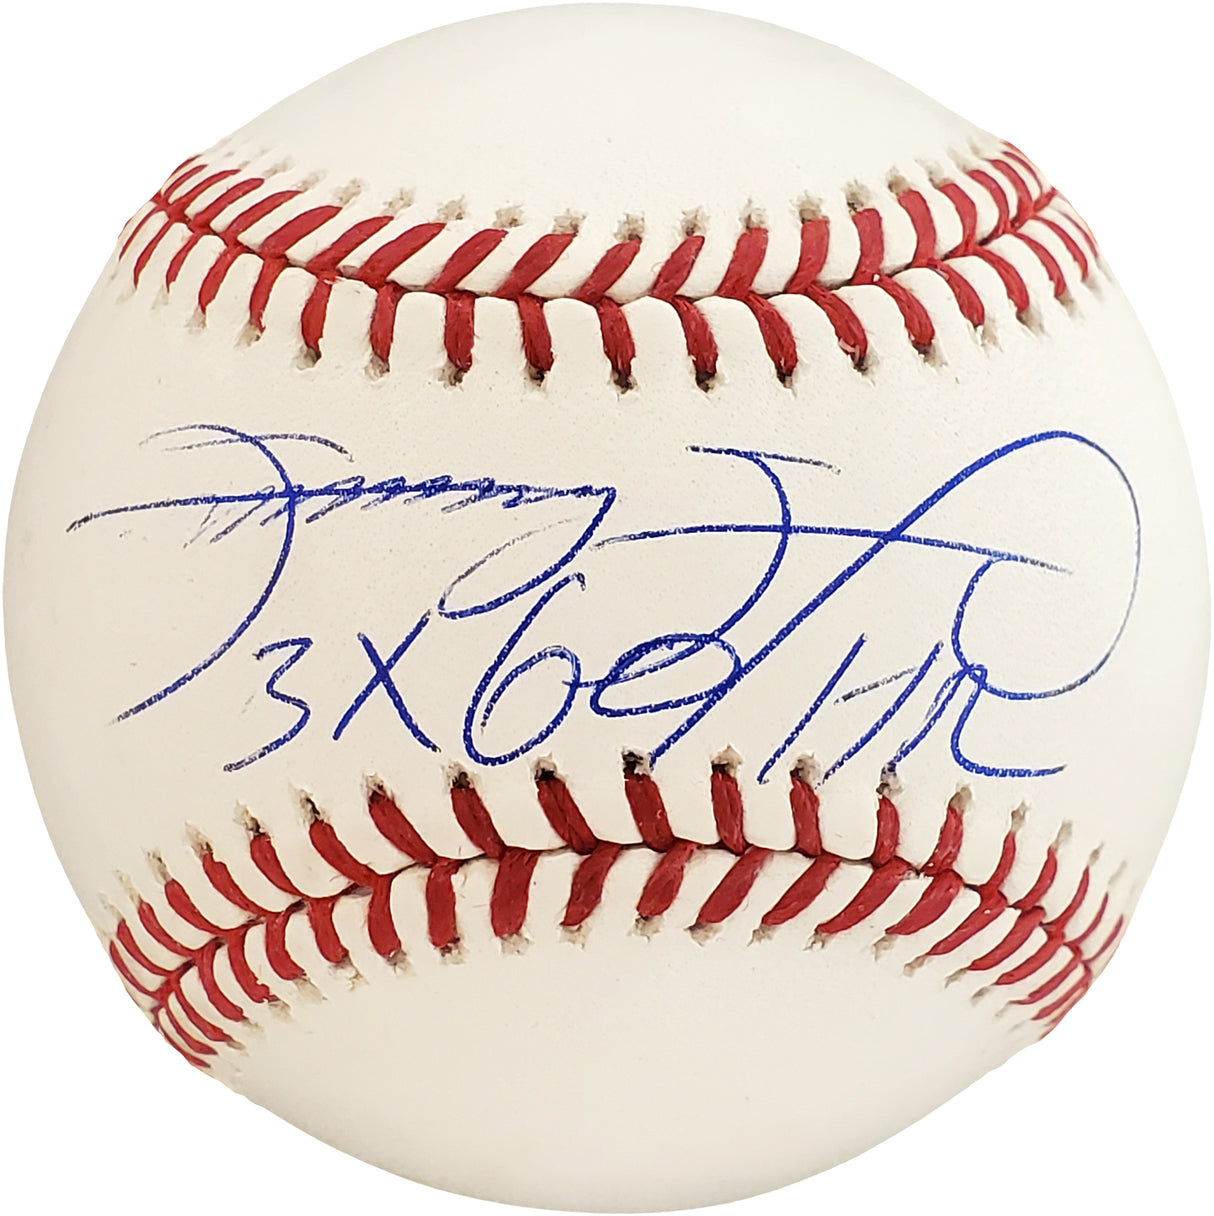 Sammy Sosa Autographed Official MLB Baseball Chicago Cubs "3x 60 HR" Beckett BAS Stock #177579